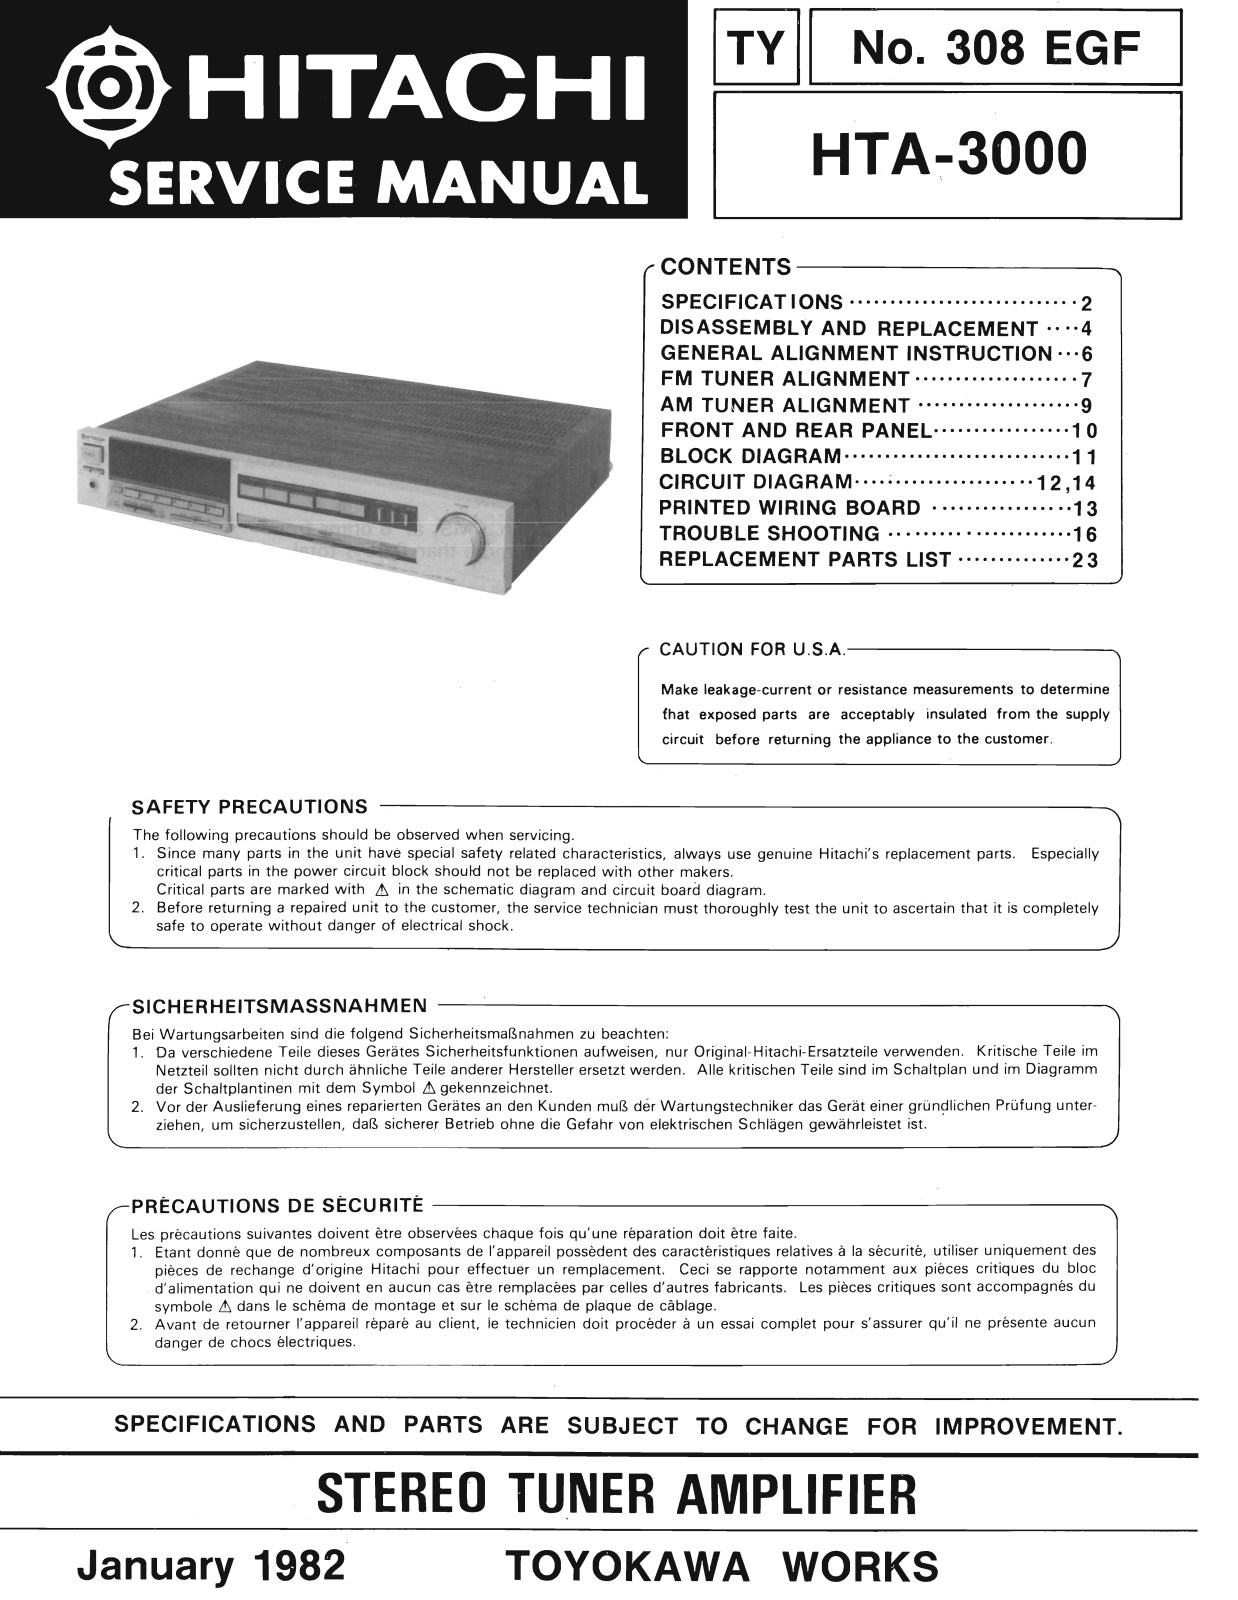 Hitachi HT-A3000 Service Manual